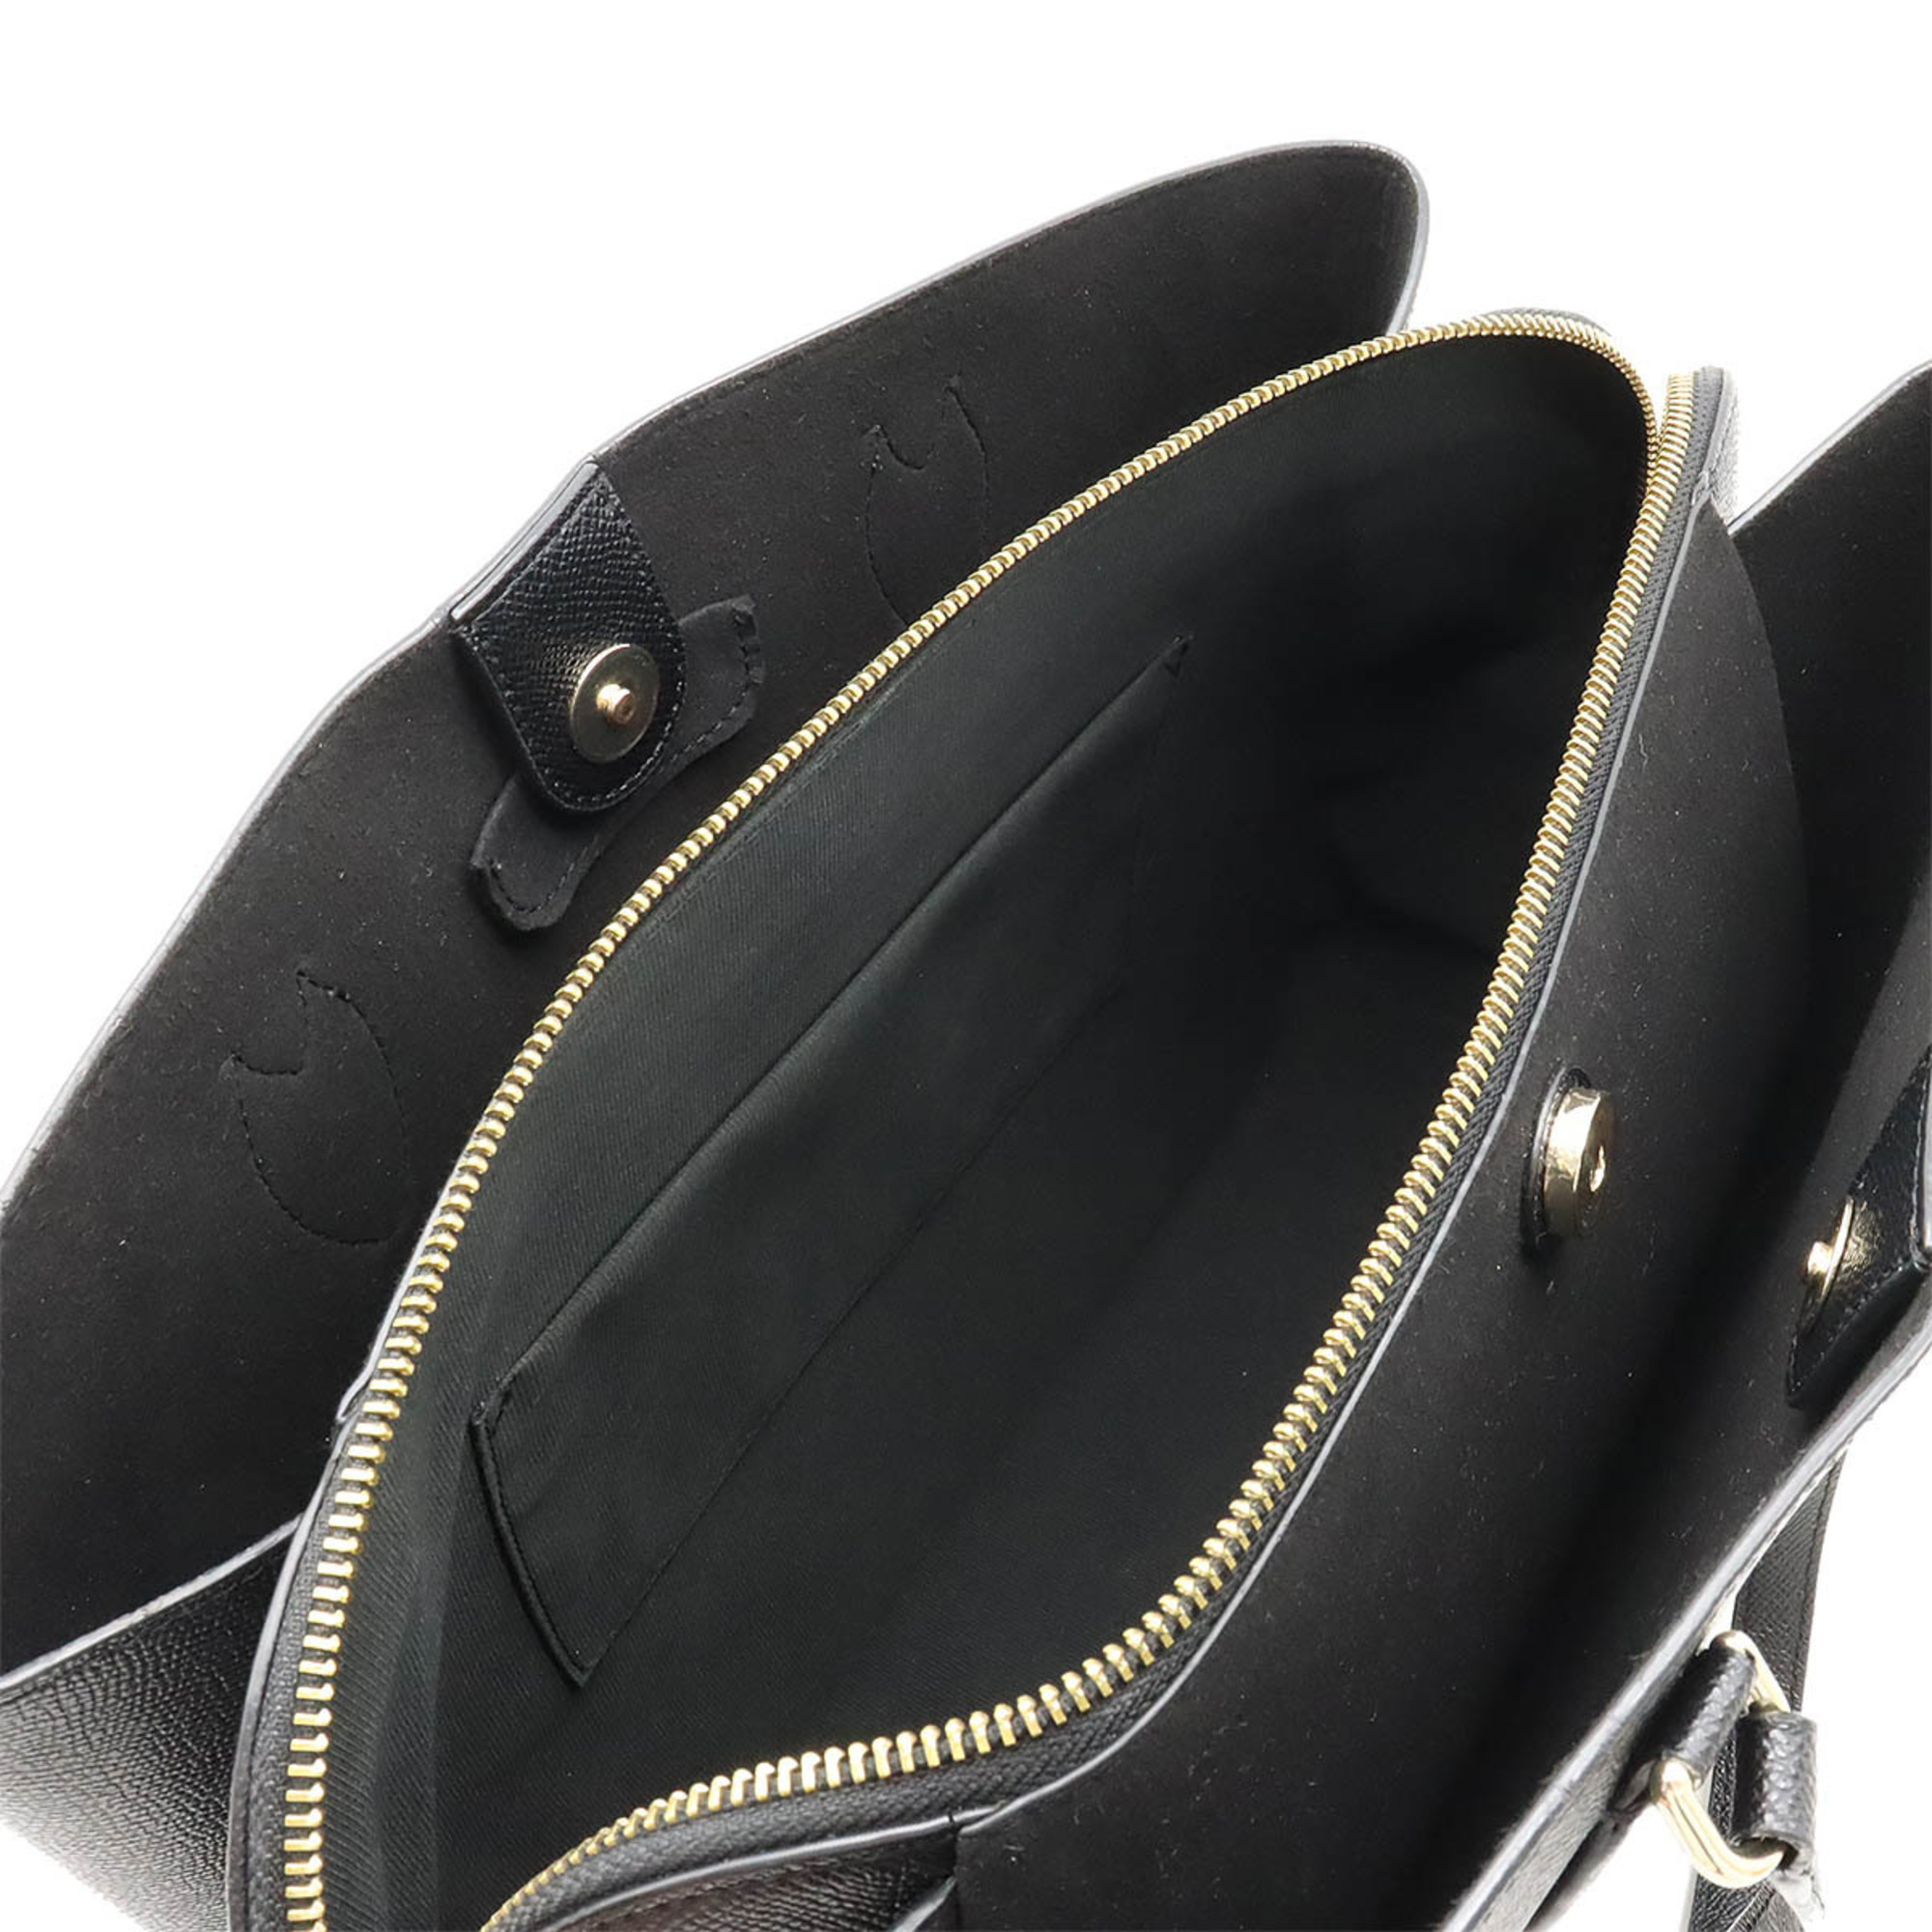 FURLA Tote bag leather black